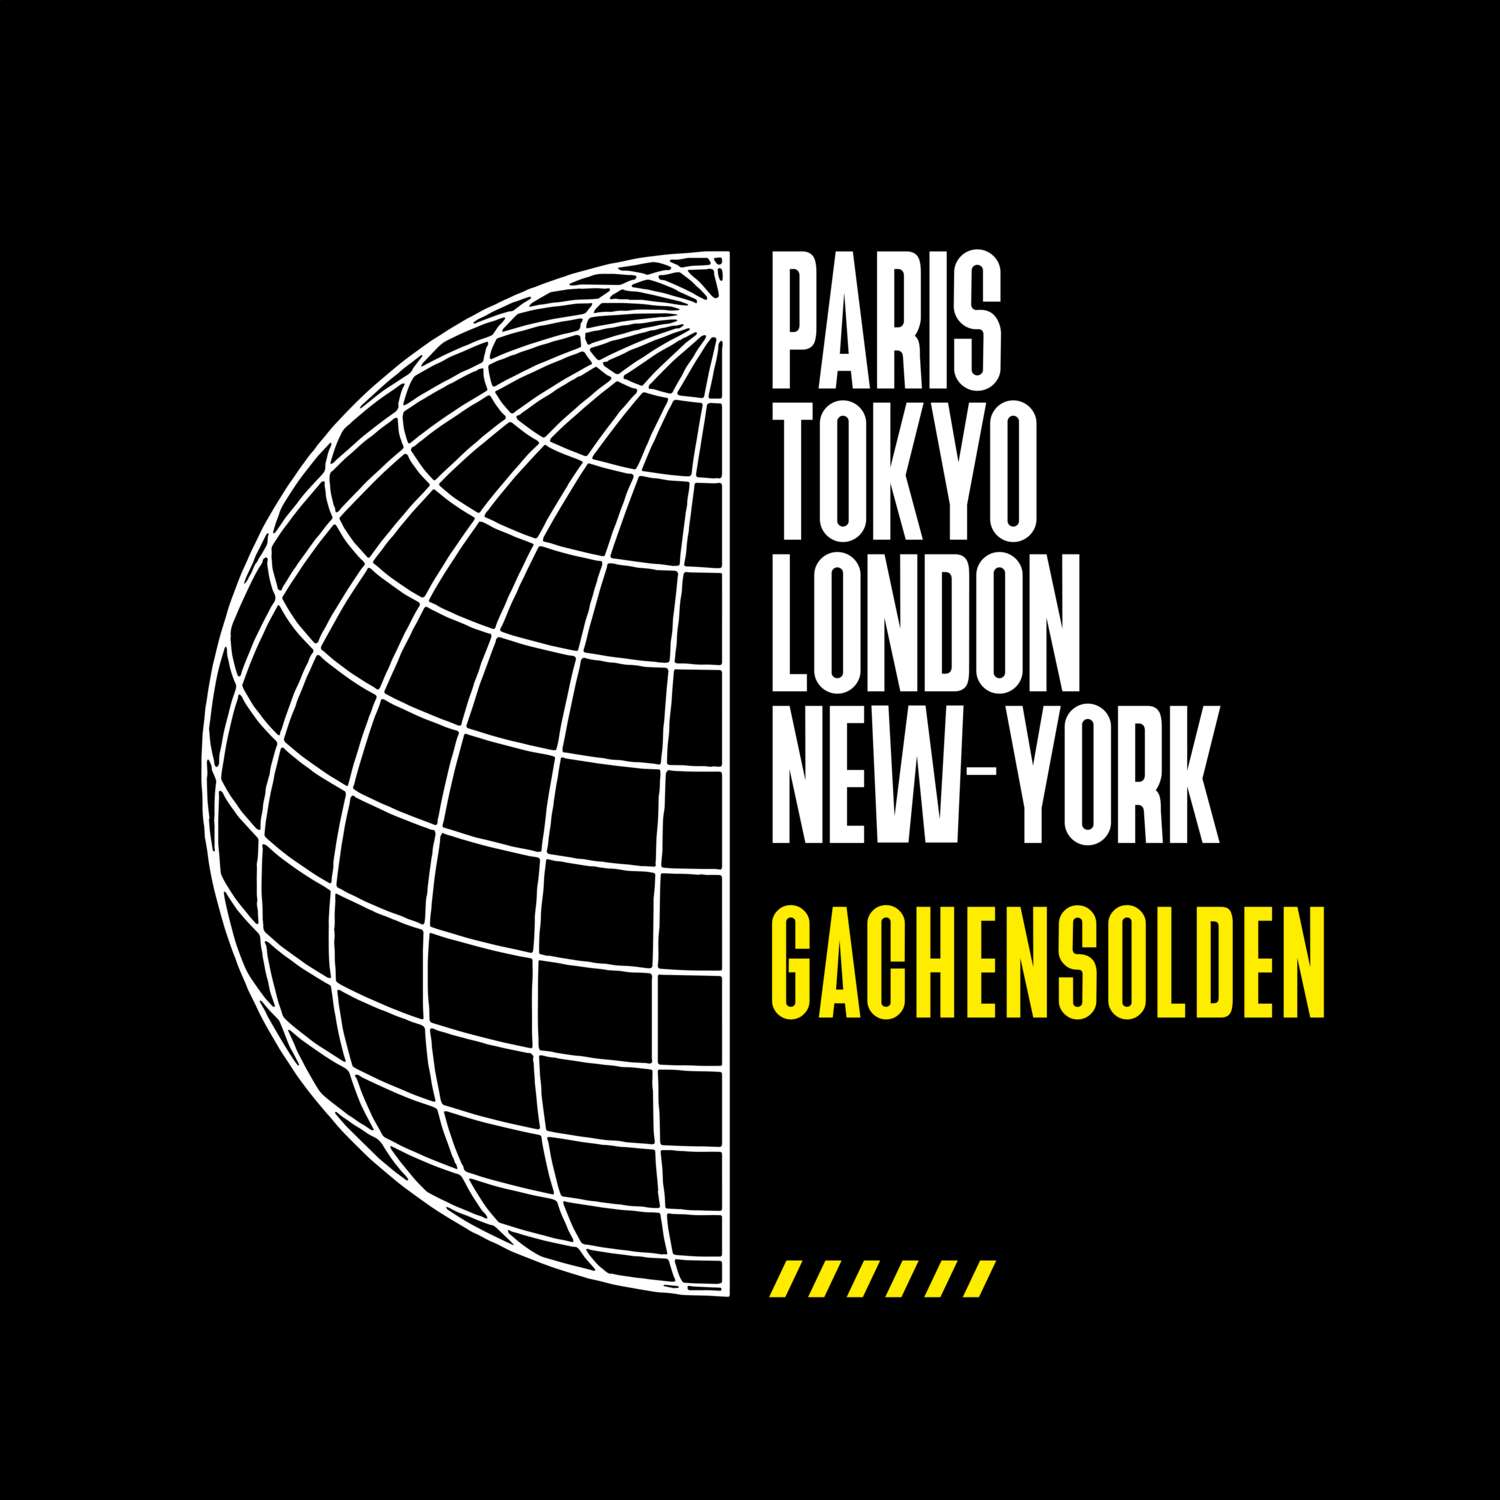 Gachensolden T-Shirt »Paris Tokyo London«